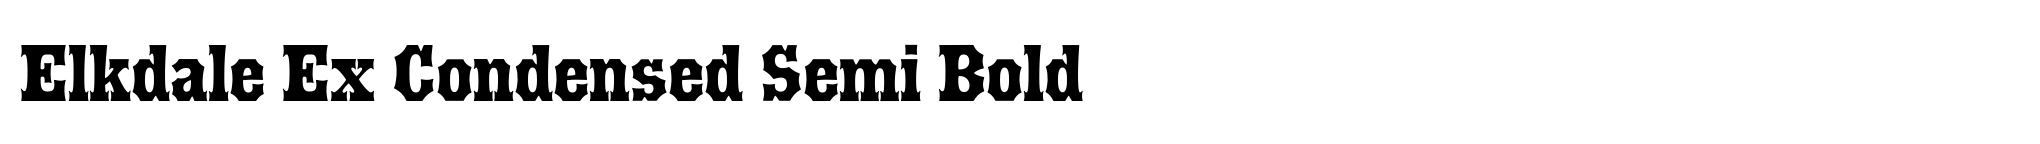 Elkdale Ex Condensed Semi Bold image